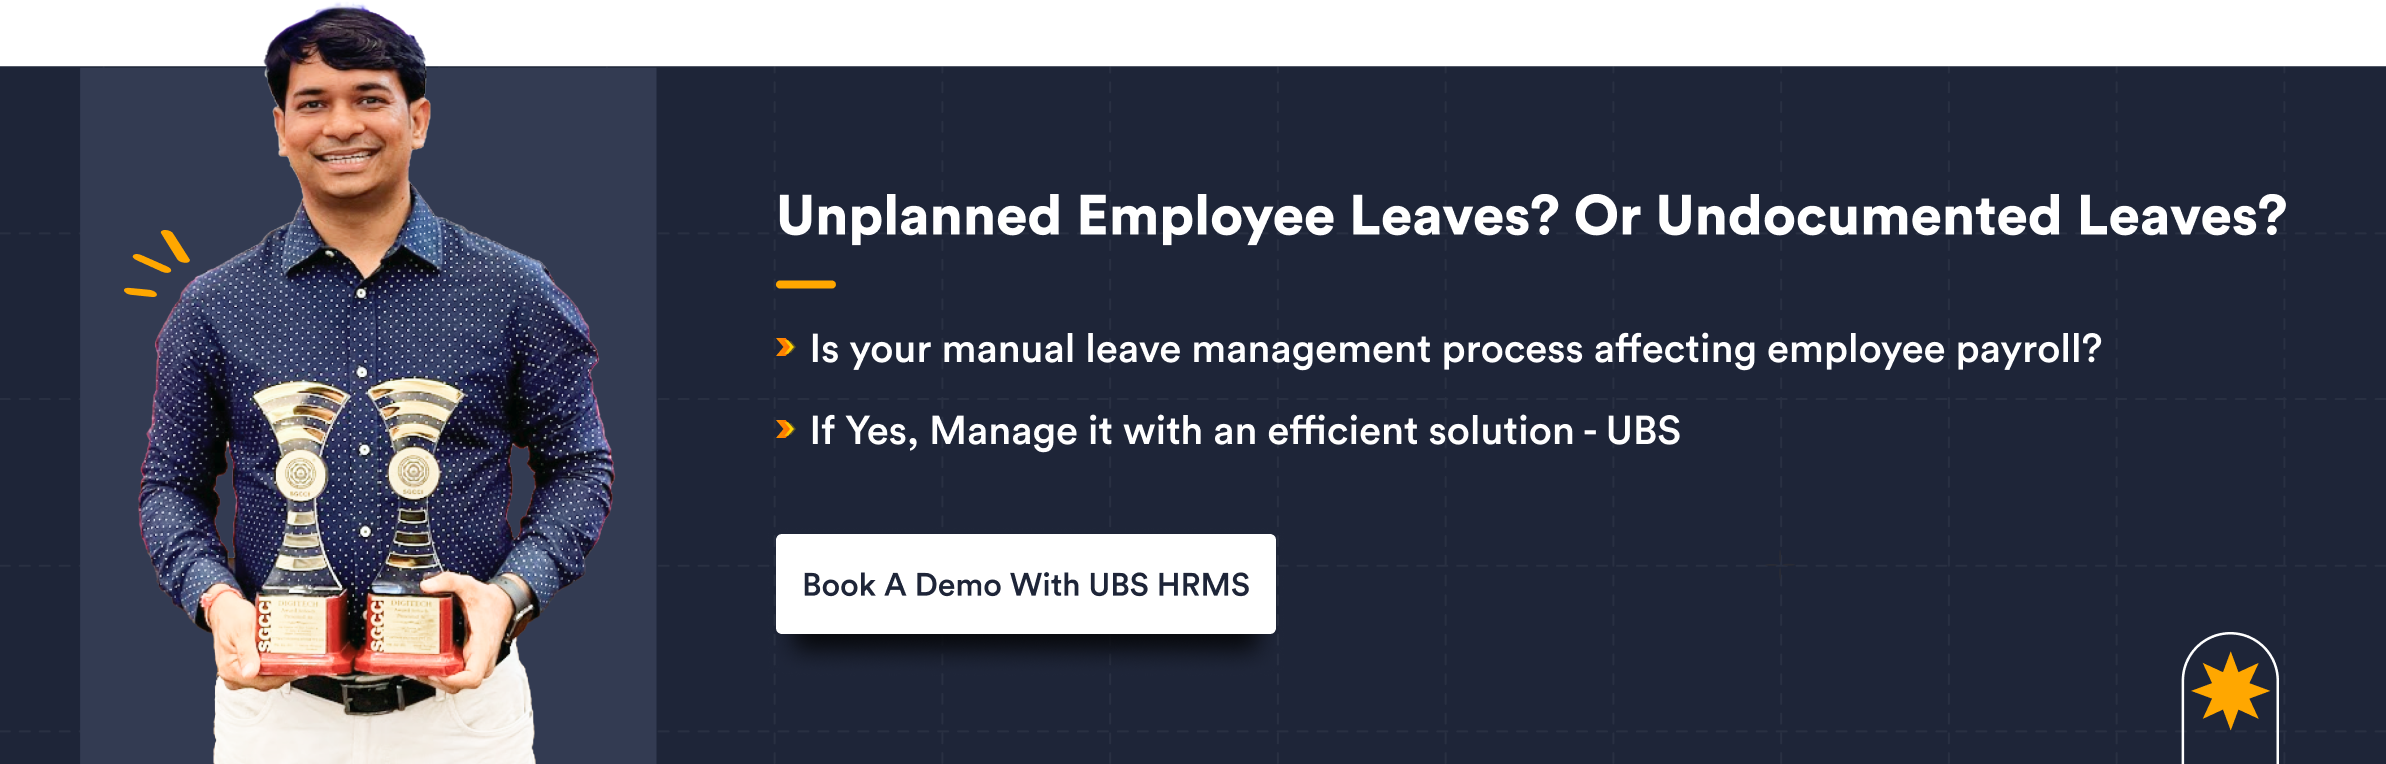 Unplanned Employee Leaves Or Undocumented Leaves